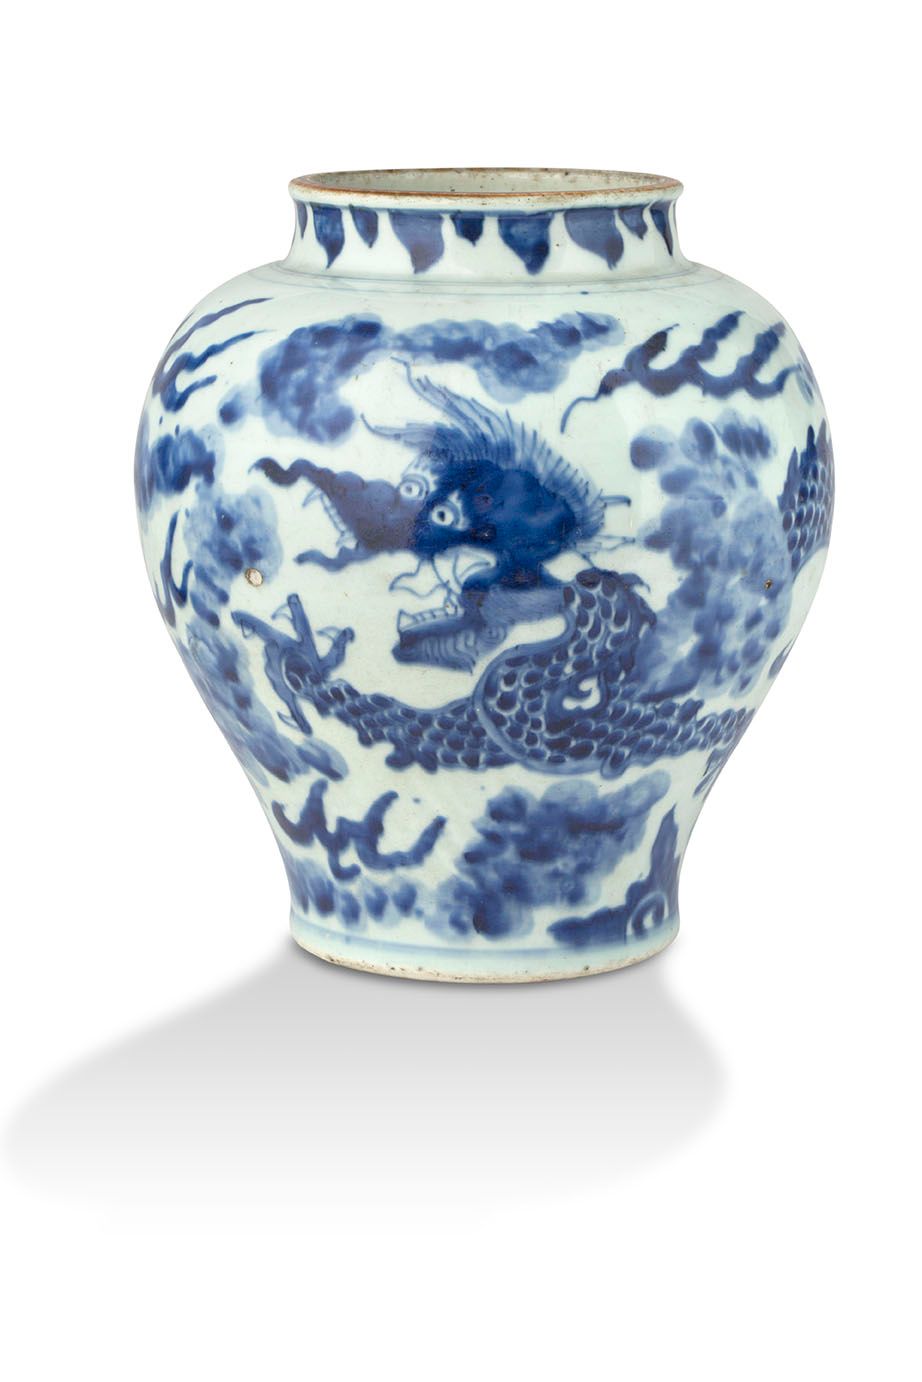 CHINE PÉRIODE TRANSITION, MILIEU DU XVIIe SIÈCLE Vaso
In porcellana bianca e blu&hellip;